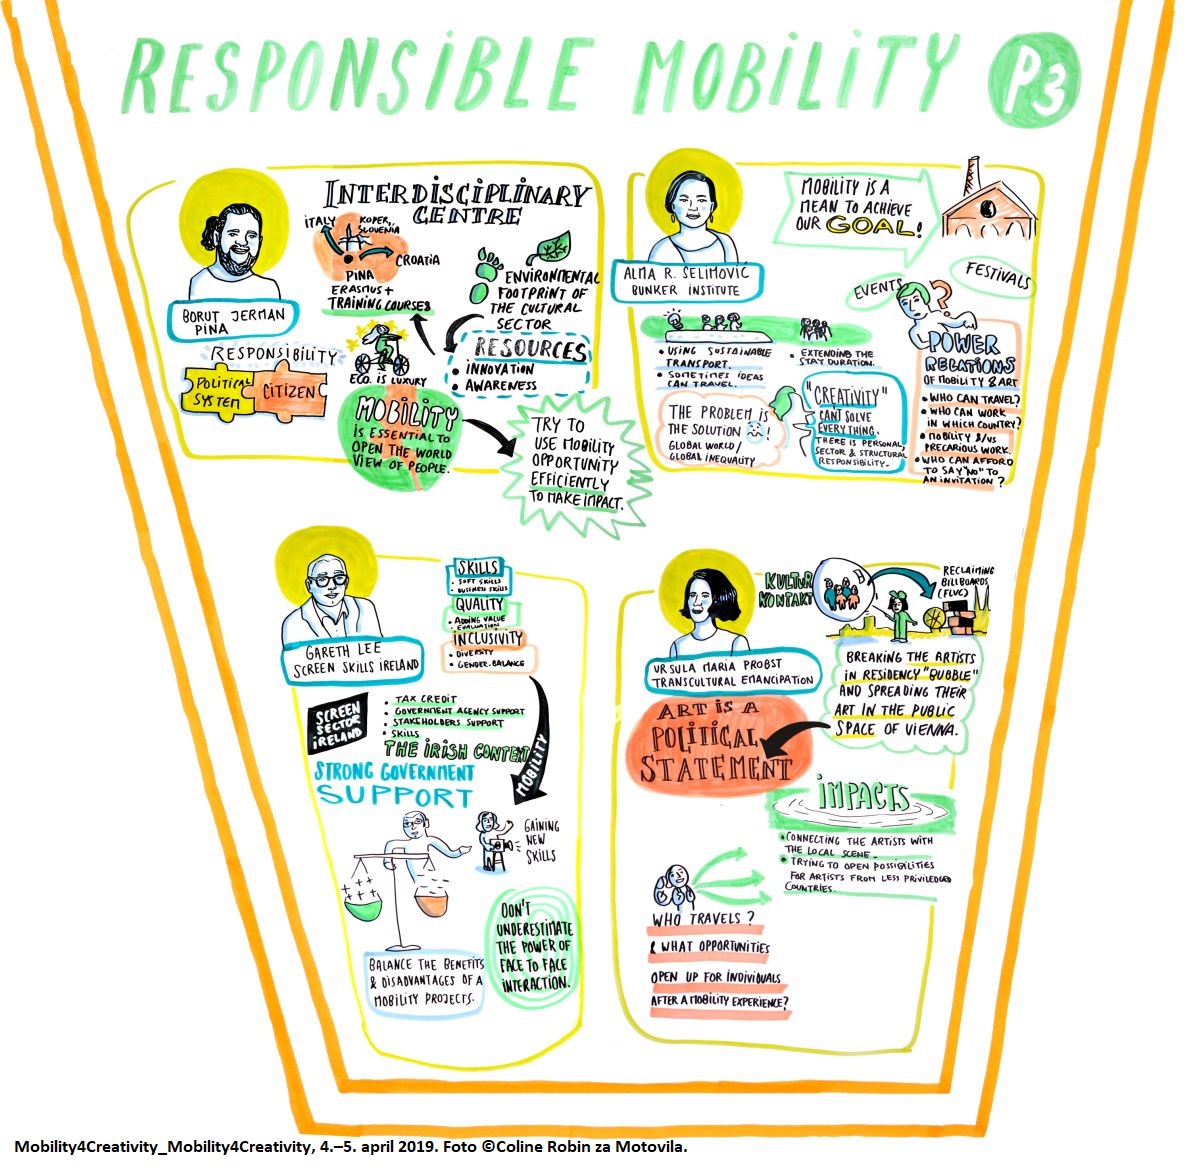 Motovila Institute 2019 Responsible Mobility infographic Photo Coline Robin.jpg